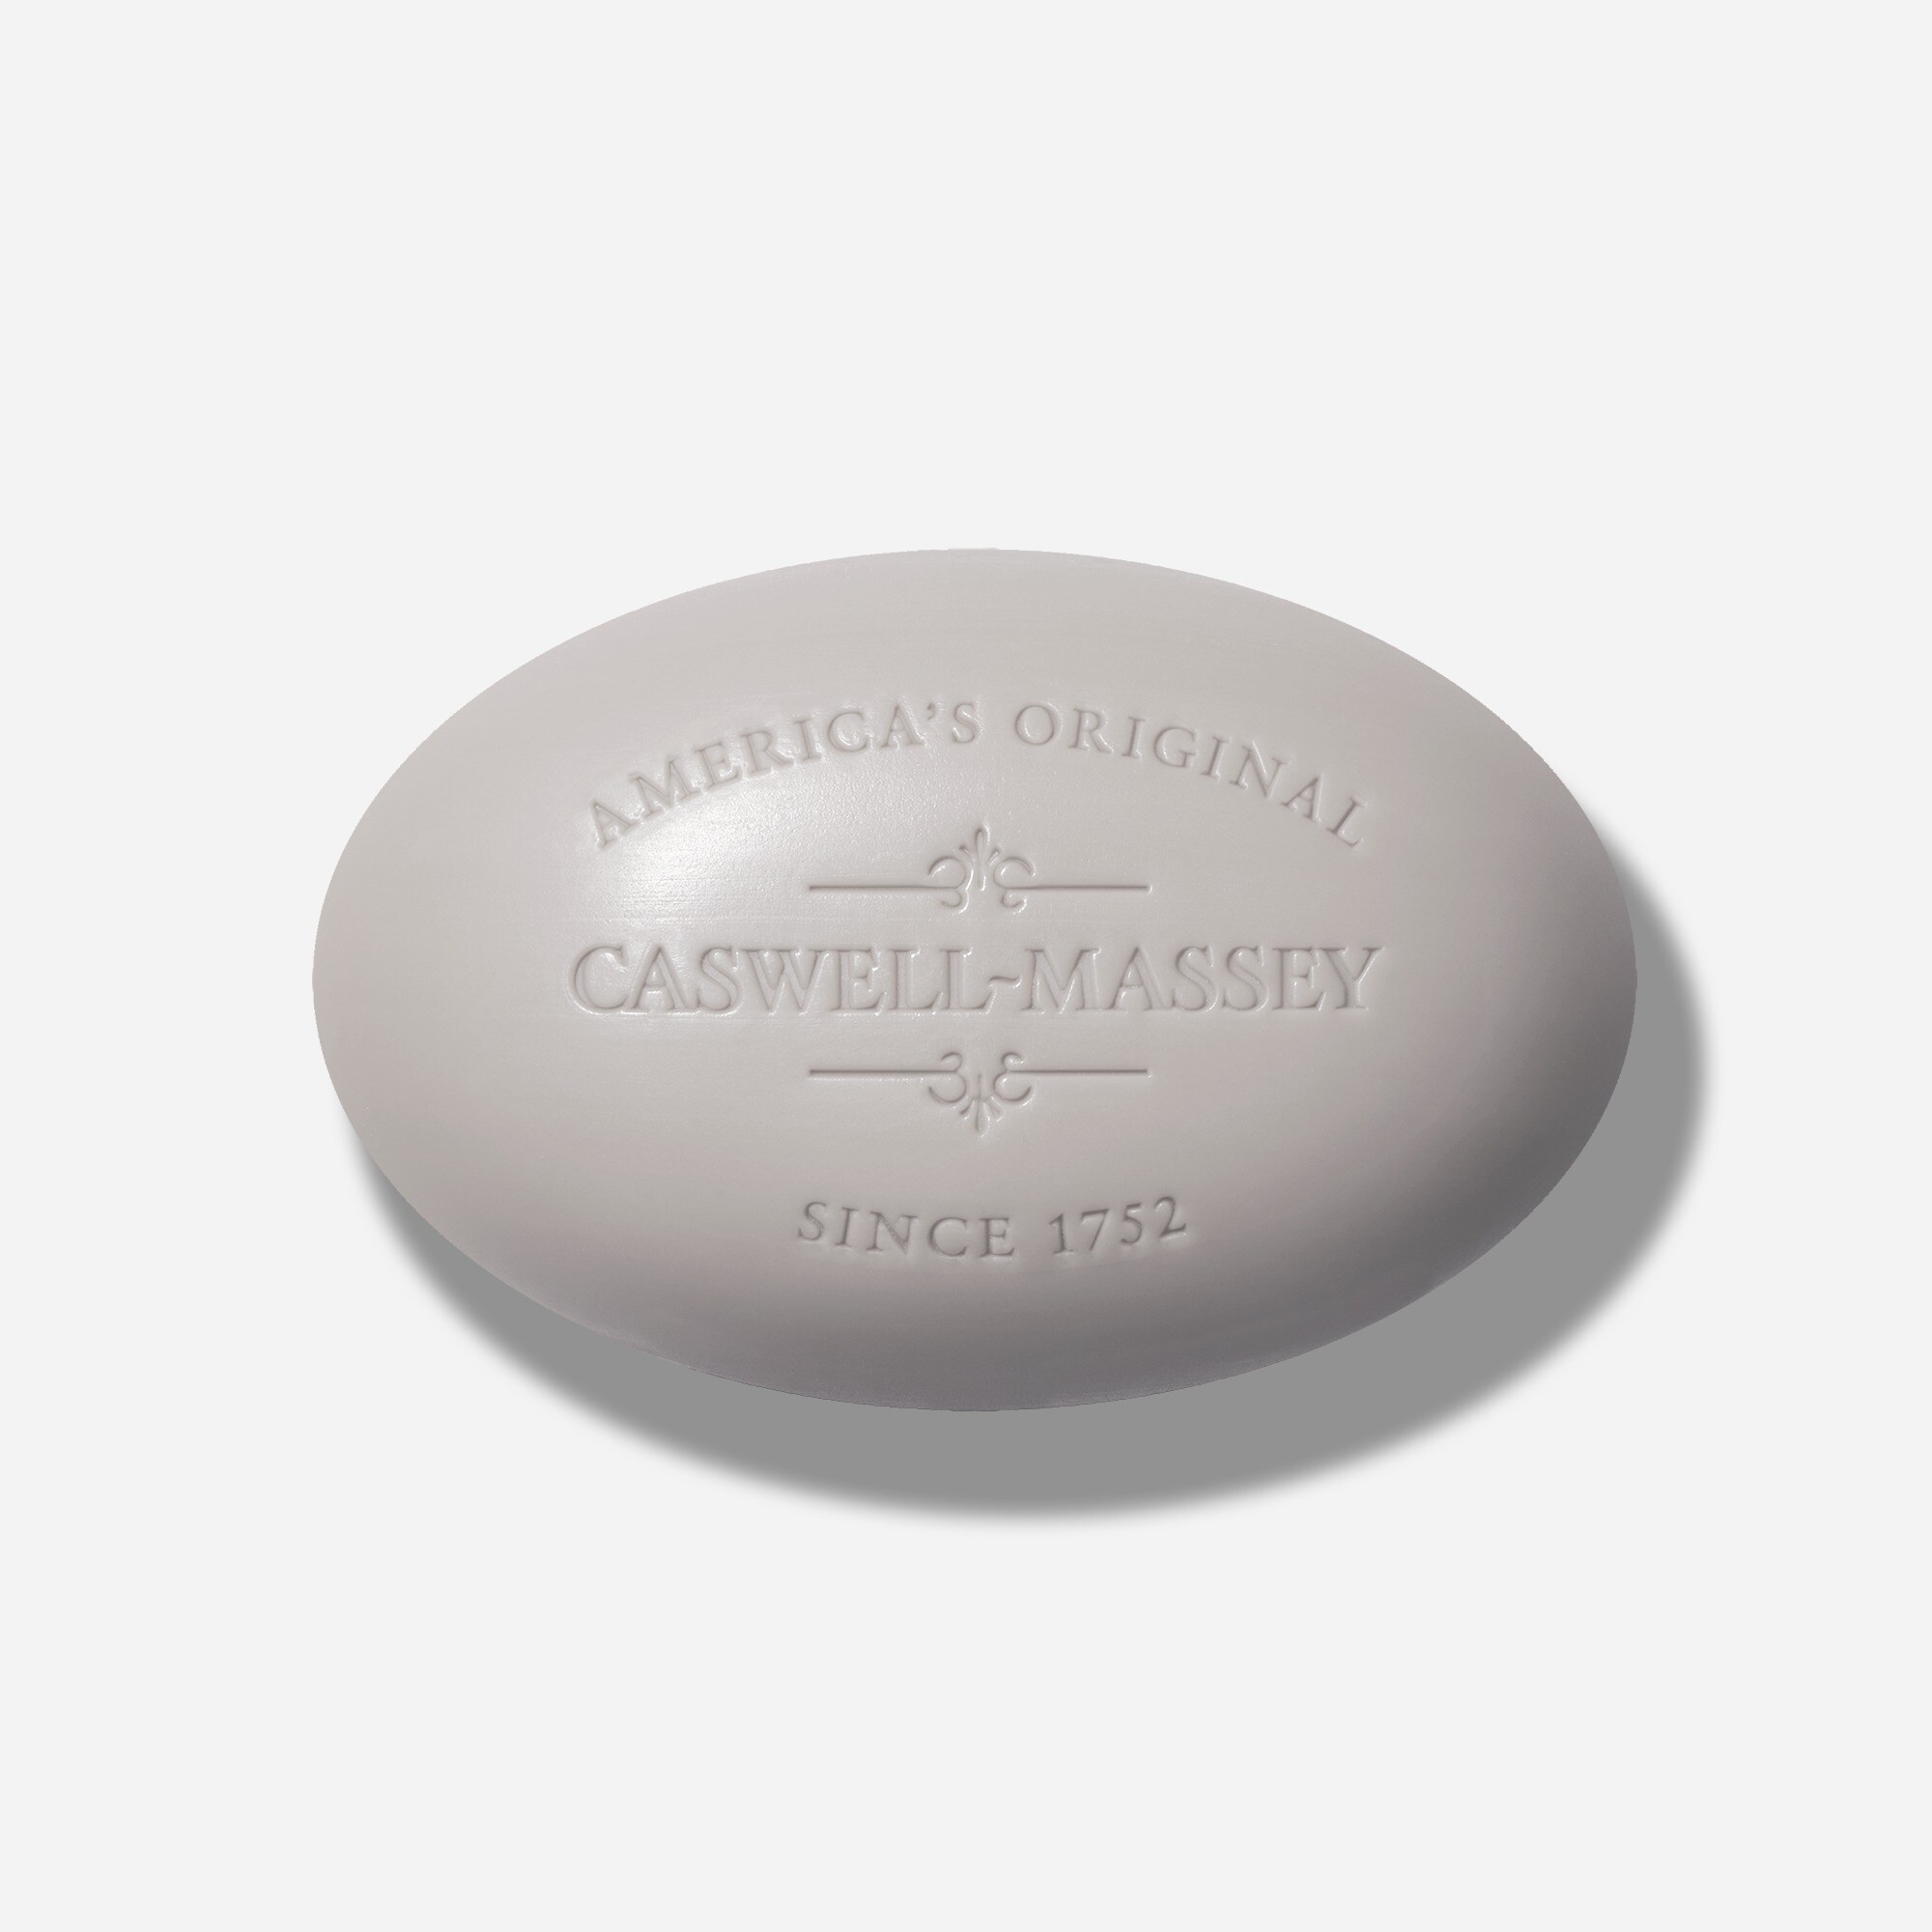  Caswell-Massey LX48 bar soap